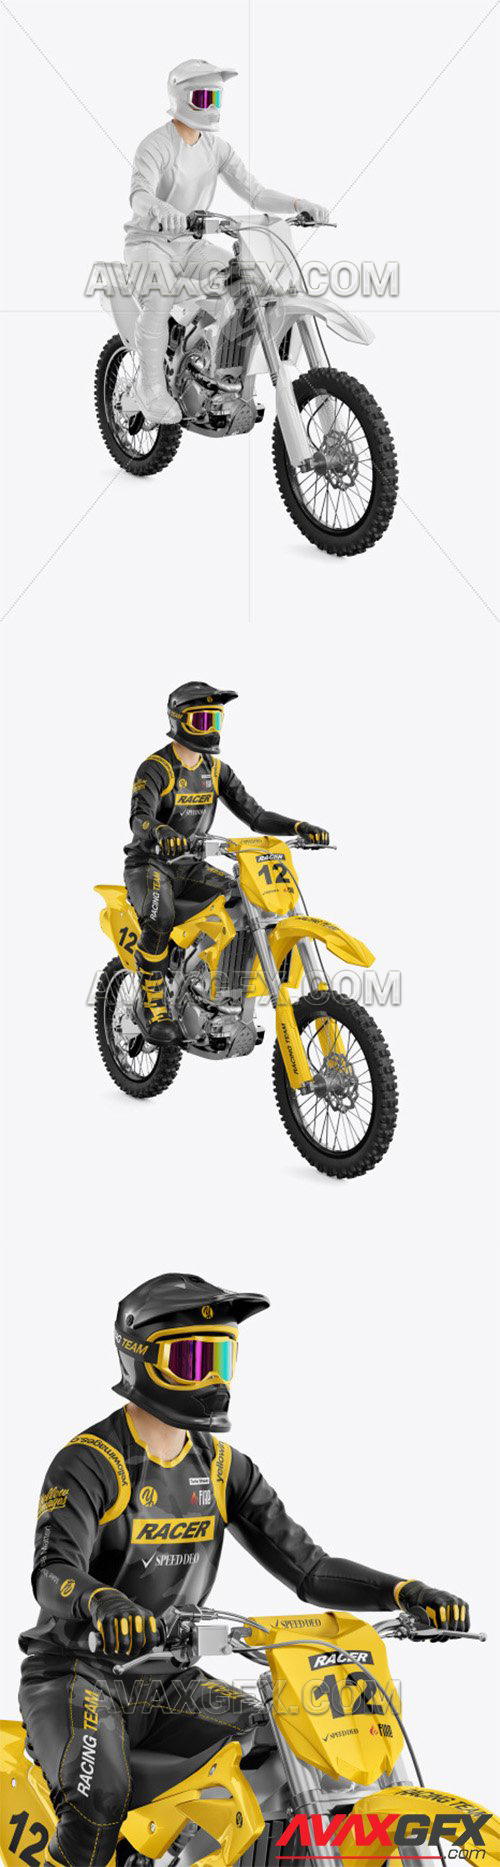 Motocross Racing Kit Mockup 57613